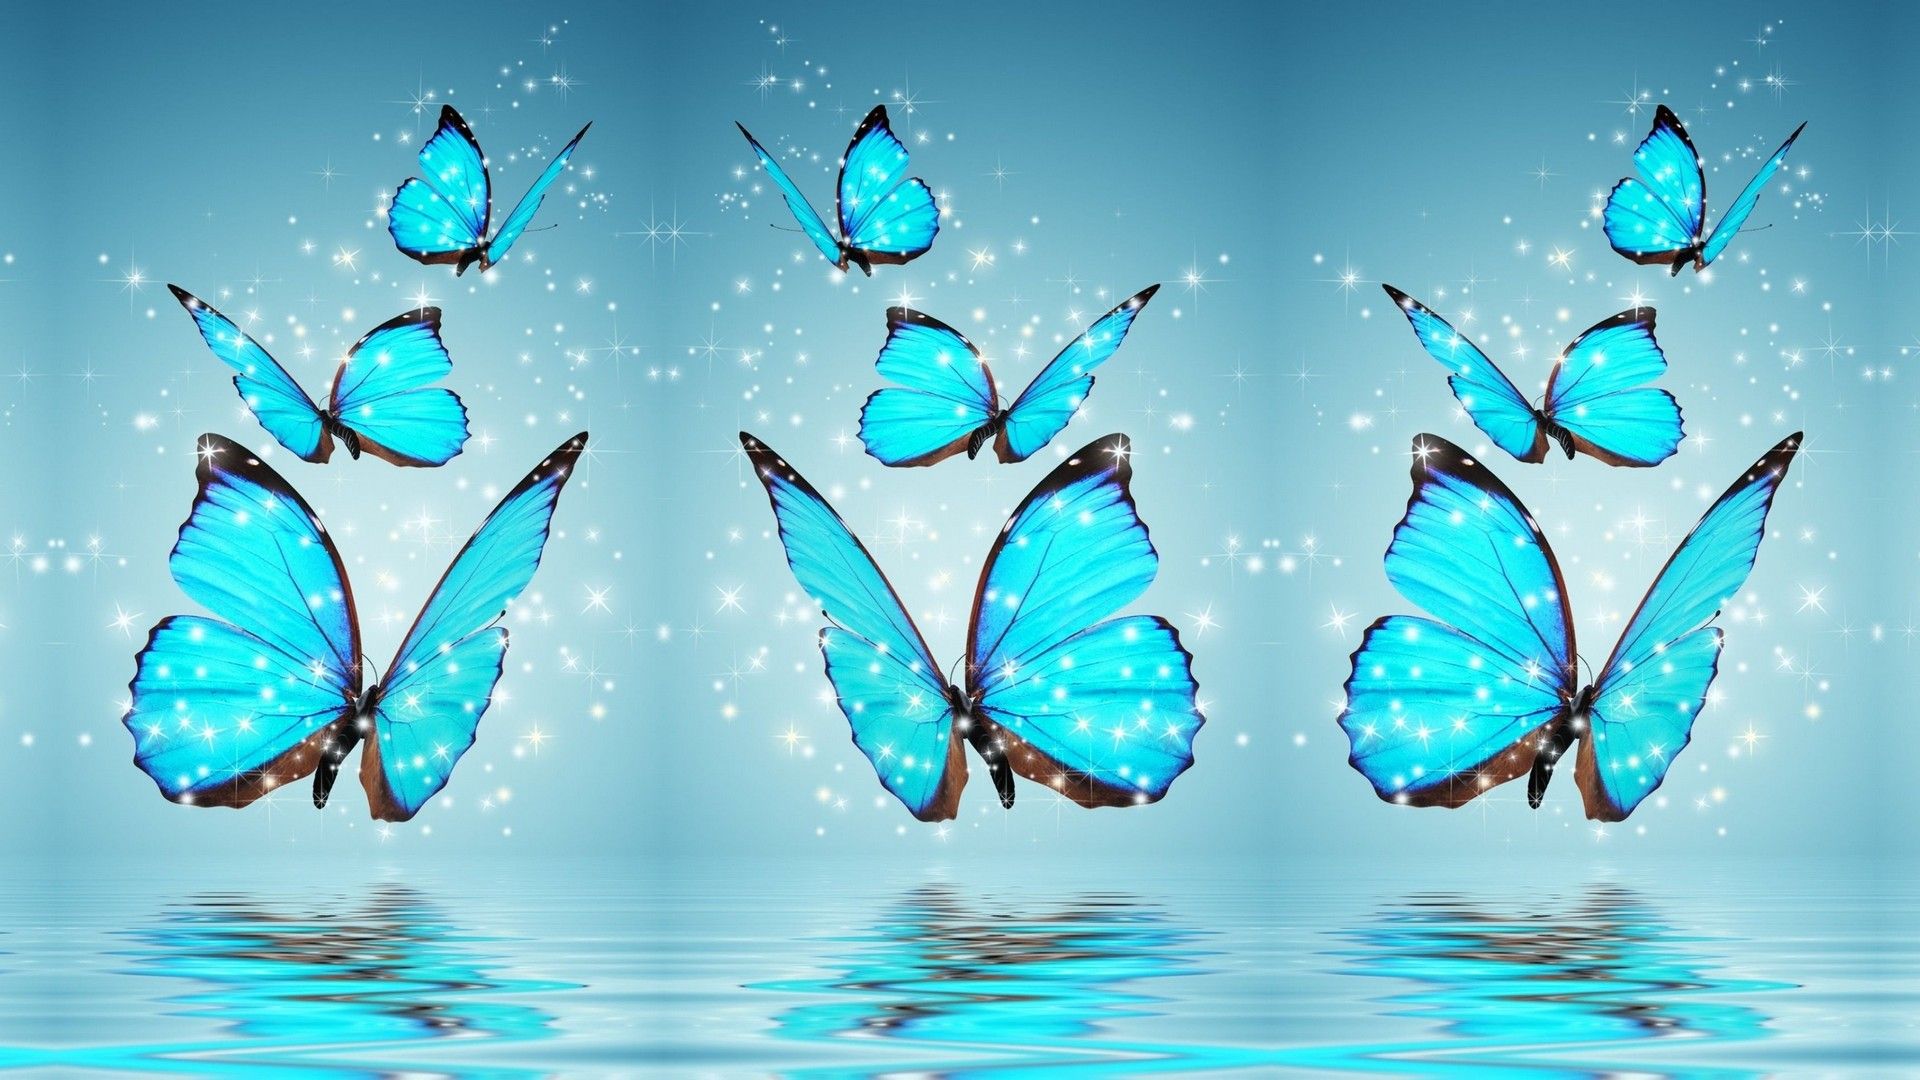 Butterflies flying over the water wallpaper - Butterfly